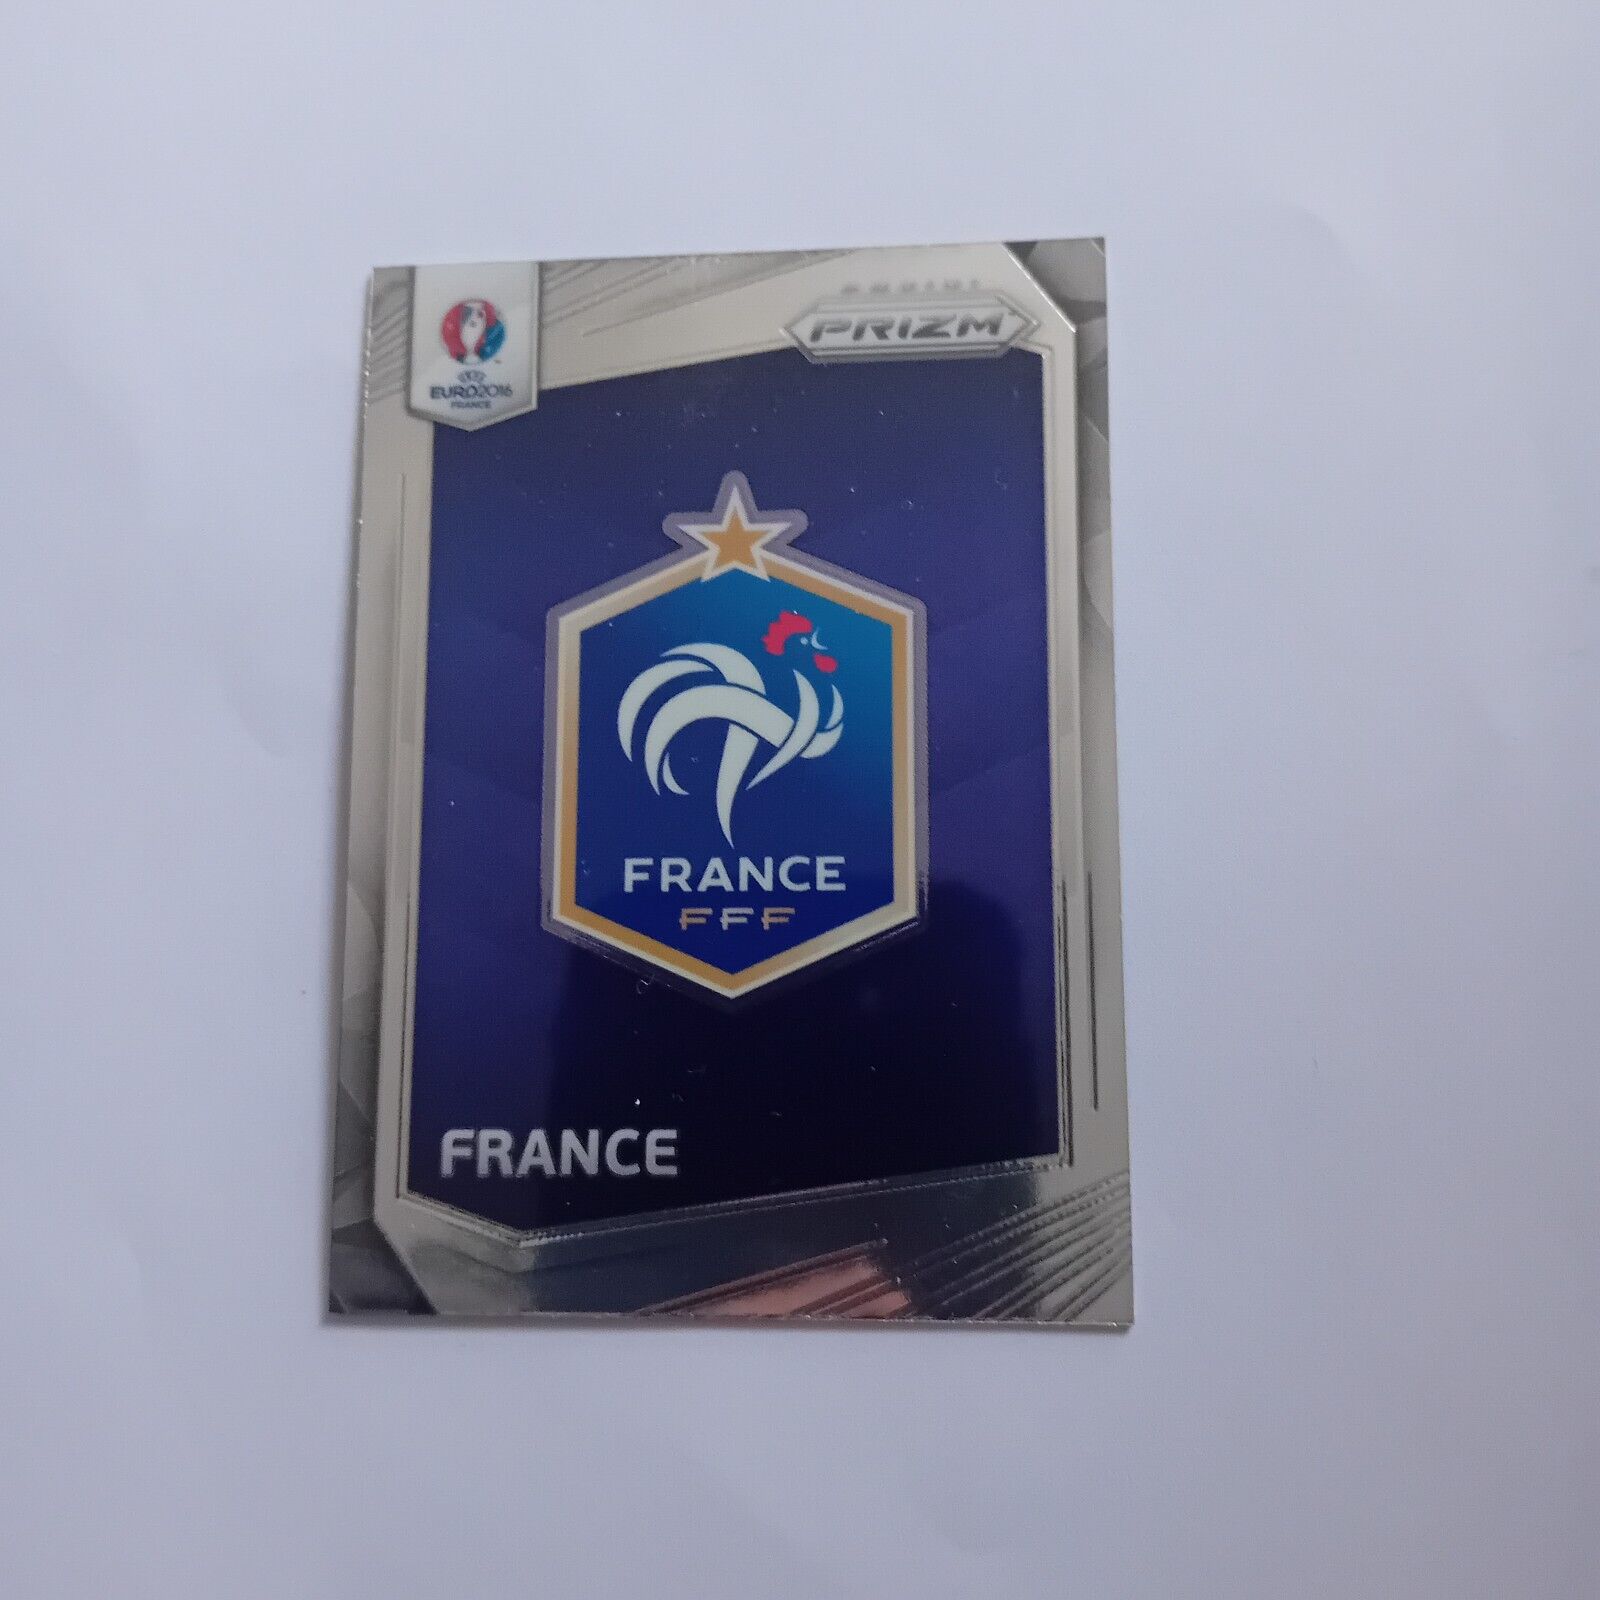 PANINI PRIZM EURO 2016 FRANCE TEAM LOGO